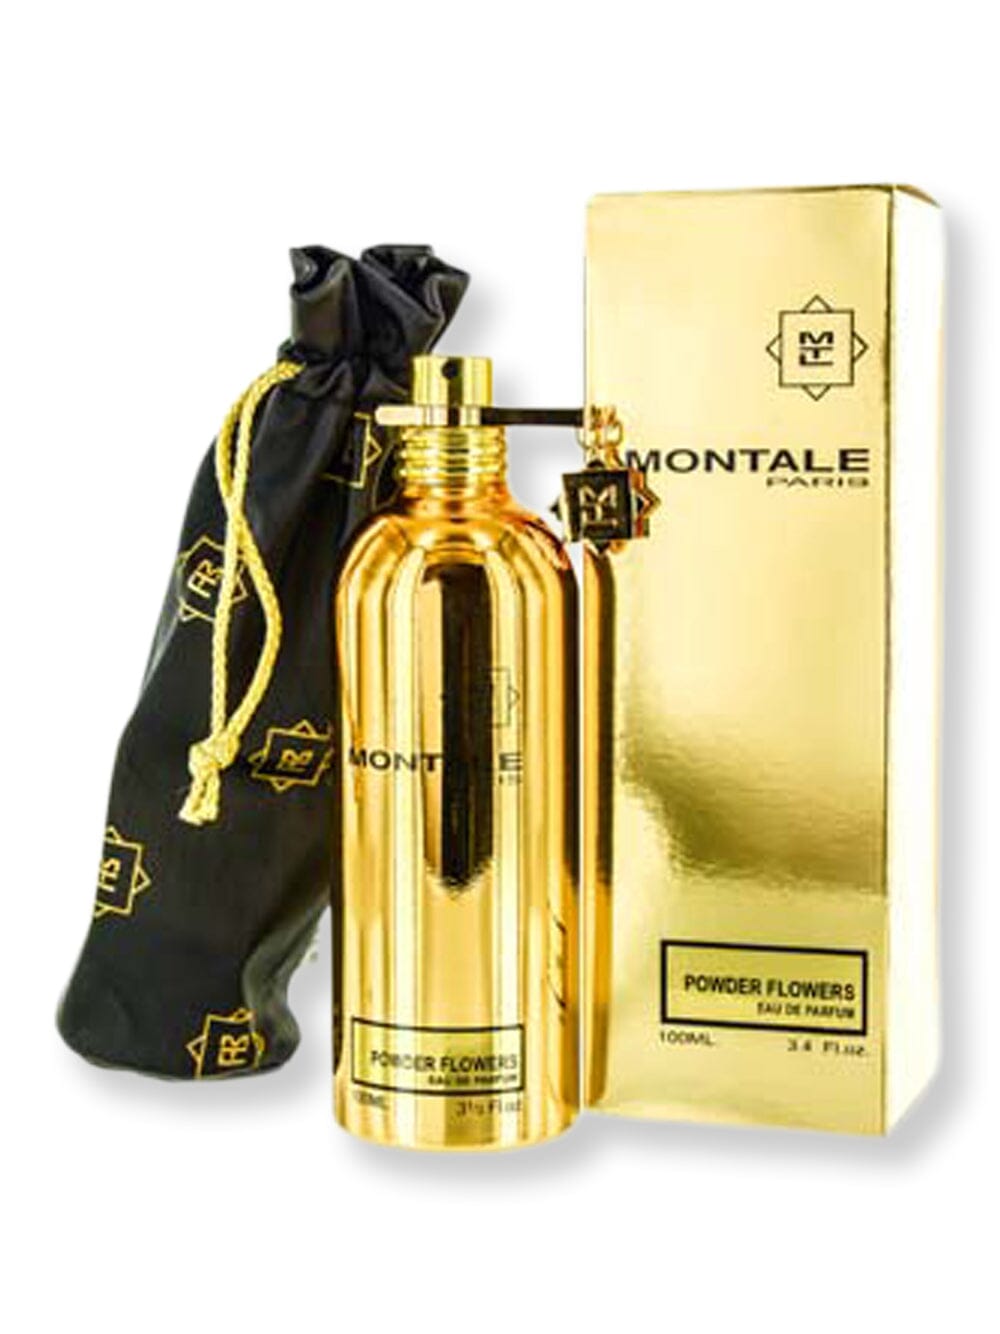 Montale Montale Powder Flowers EDP Spray 3.3 oz100 ml Perfume 